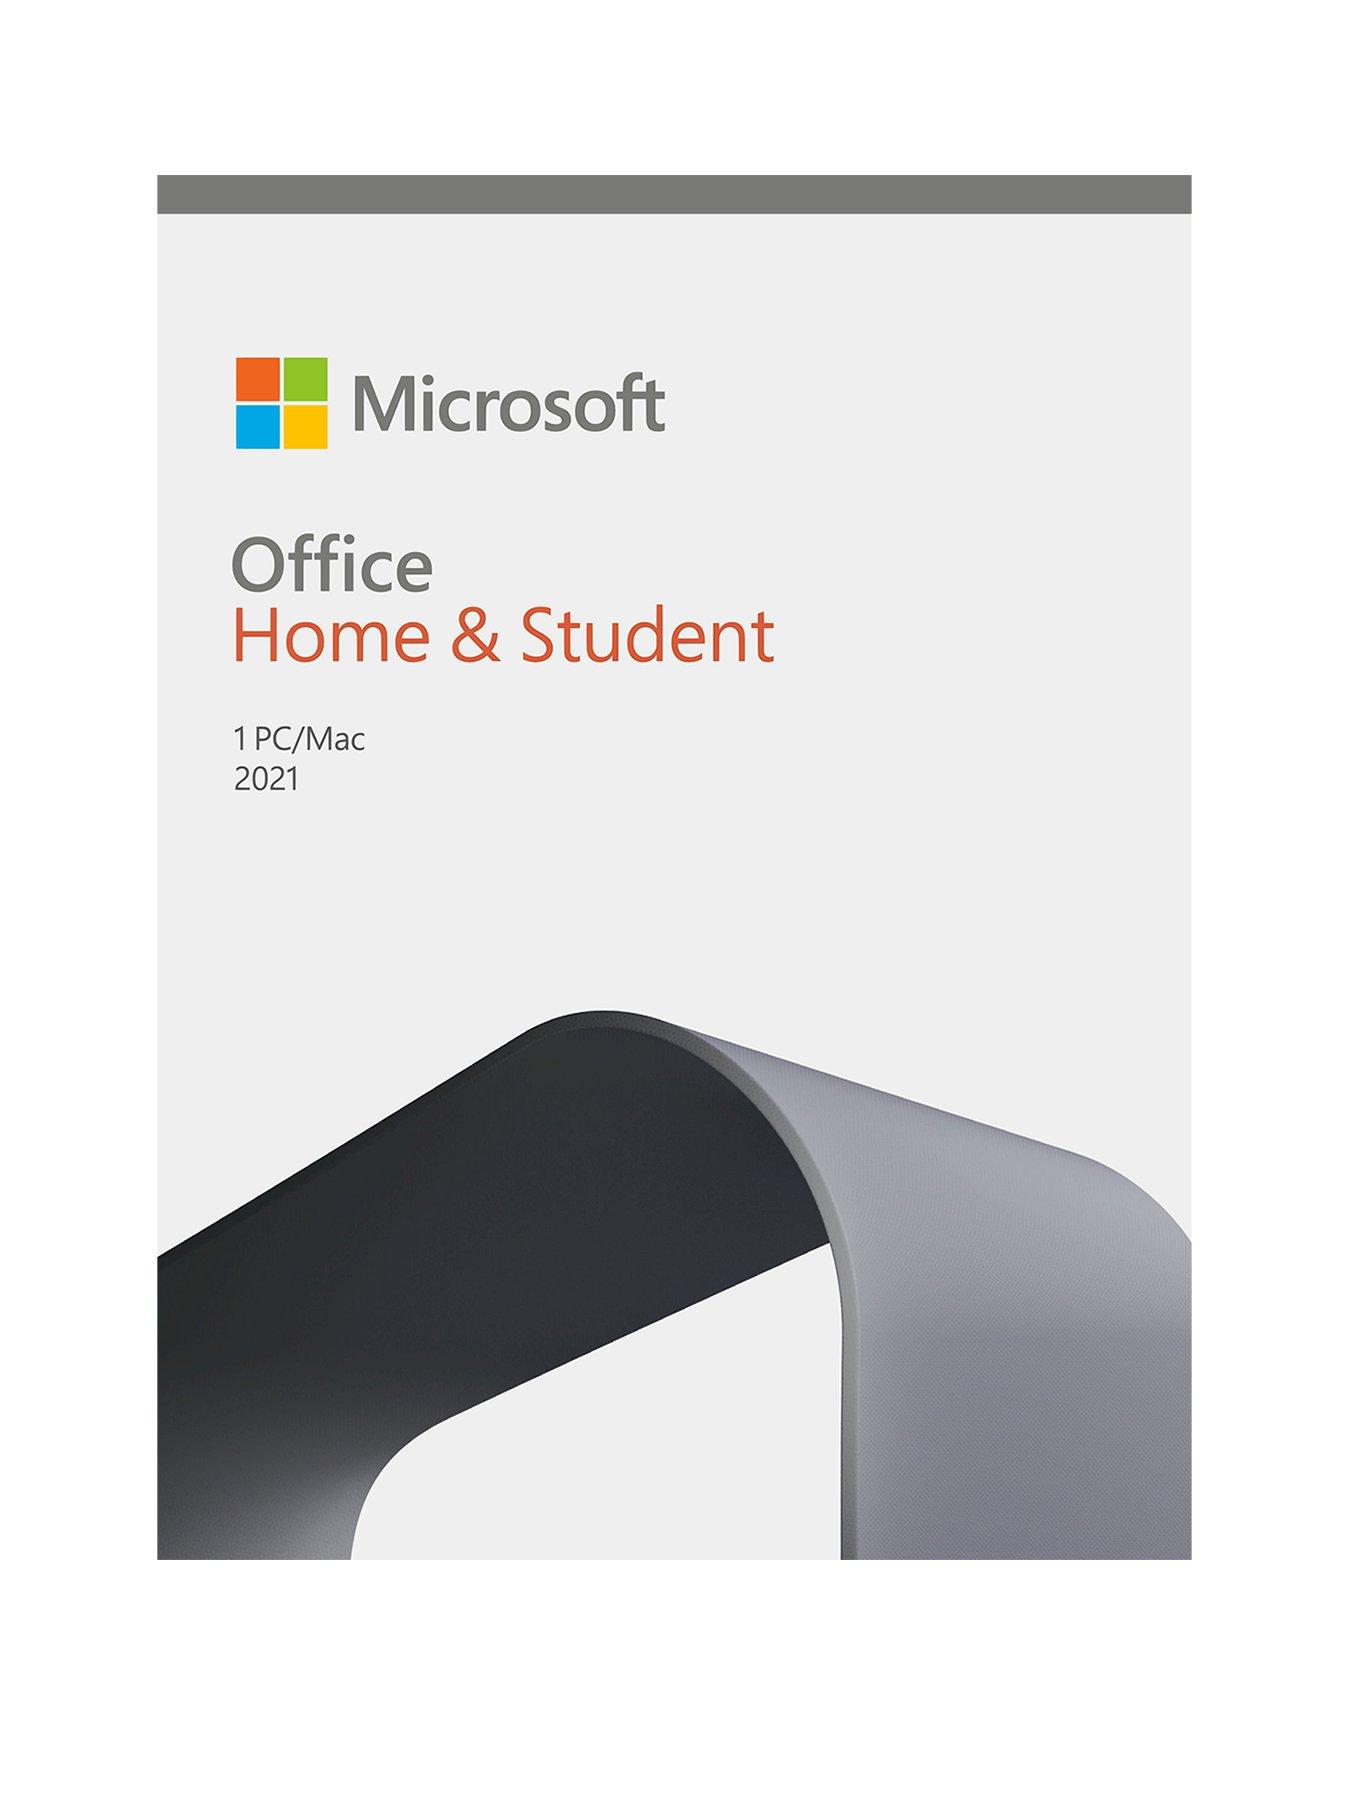 Microsoft Office Home & Student 2021 - 1 PC/Mac (Digital Download) |  